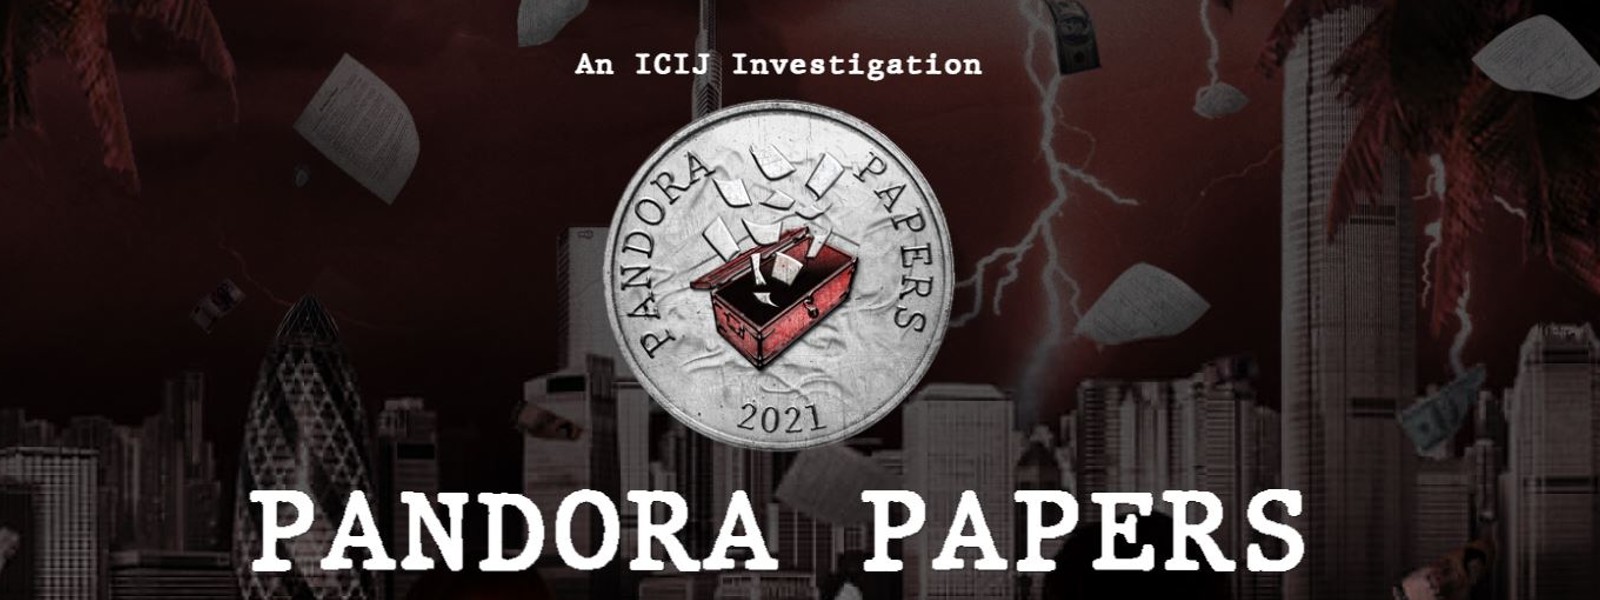 #PandoraPapers : T.Nadesan, husband of Nirupama Rajapaksa calls for independent probe